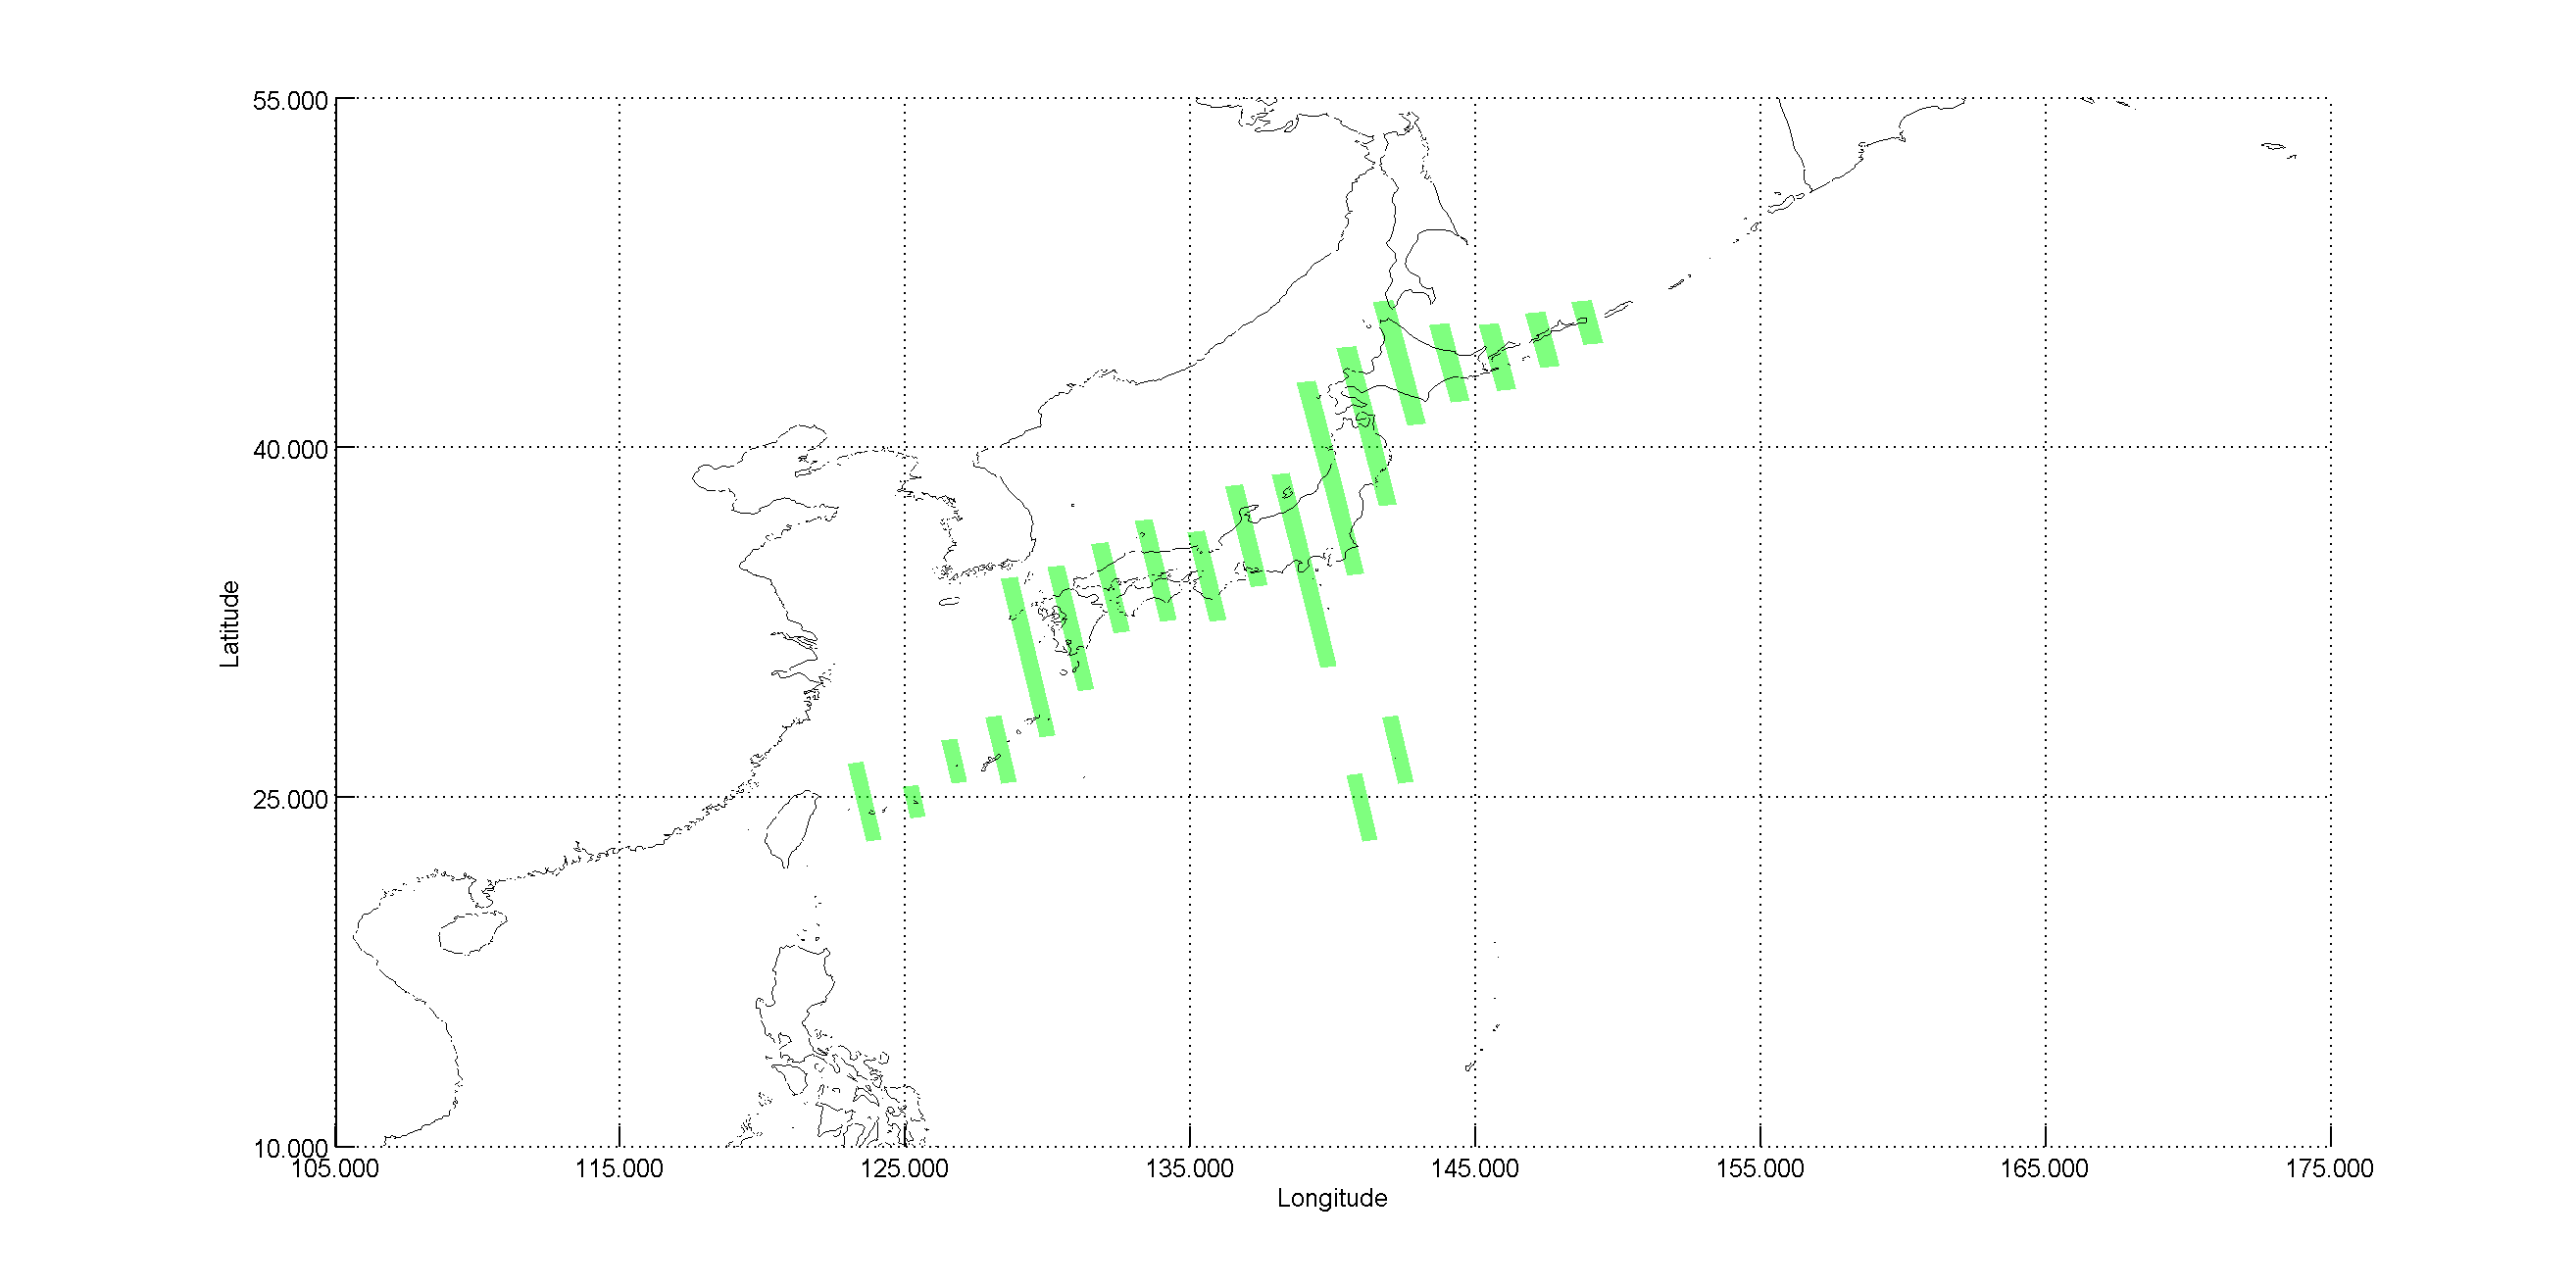 CYCLE_148 - Japan Ascending passes